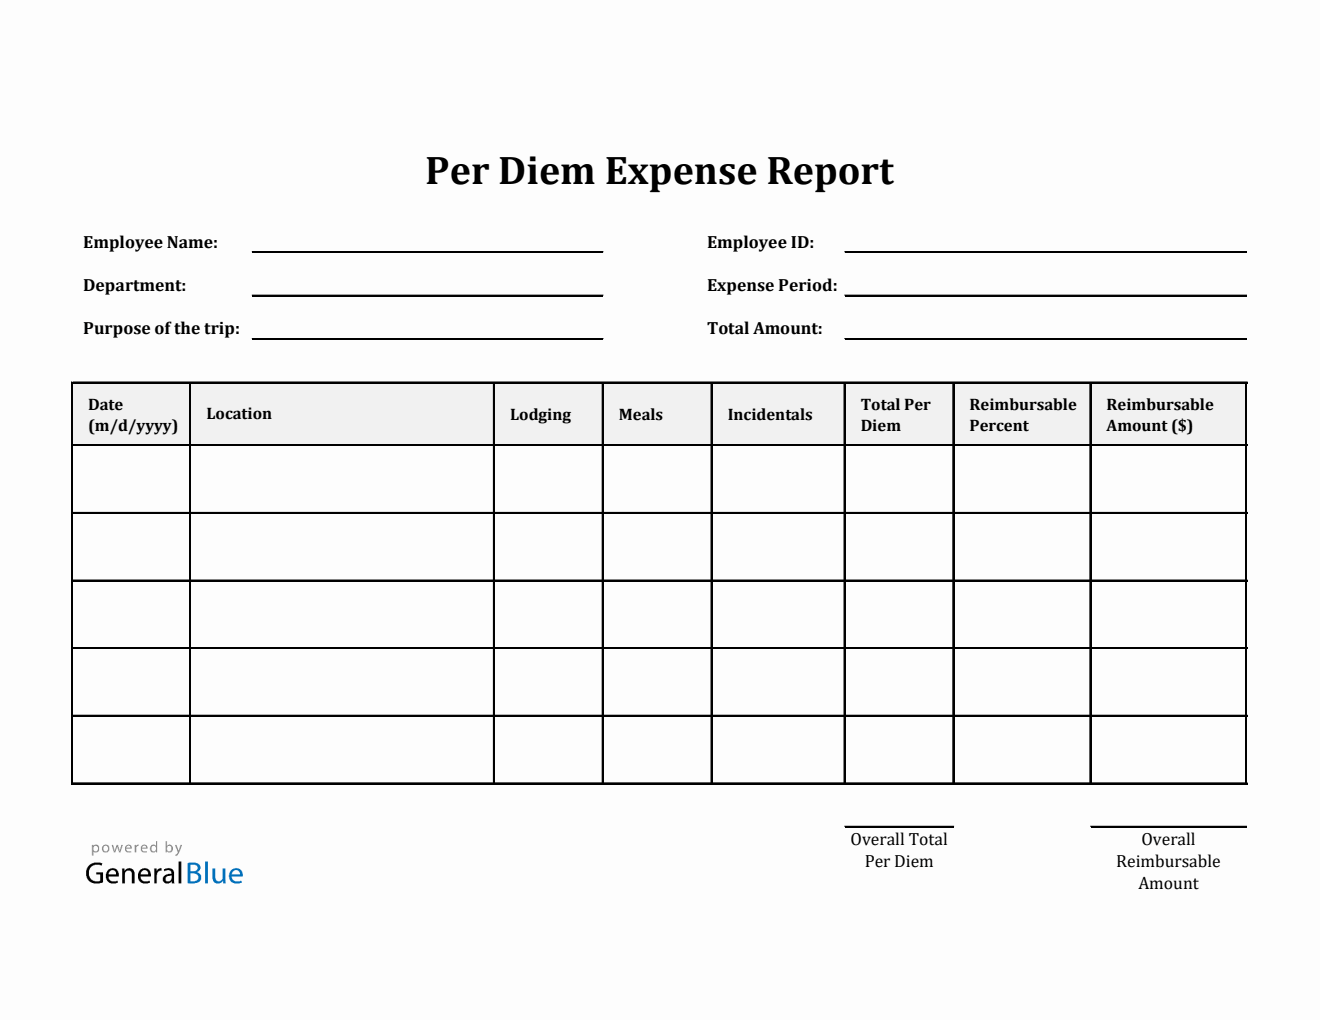 Blank Per Diem Expense Report Template in Excel (Plain)